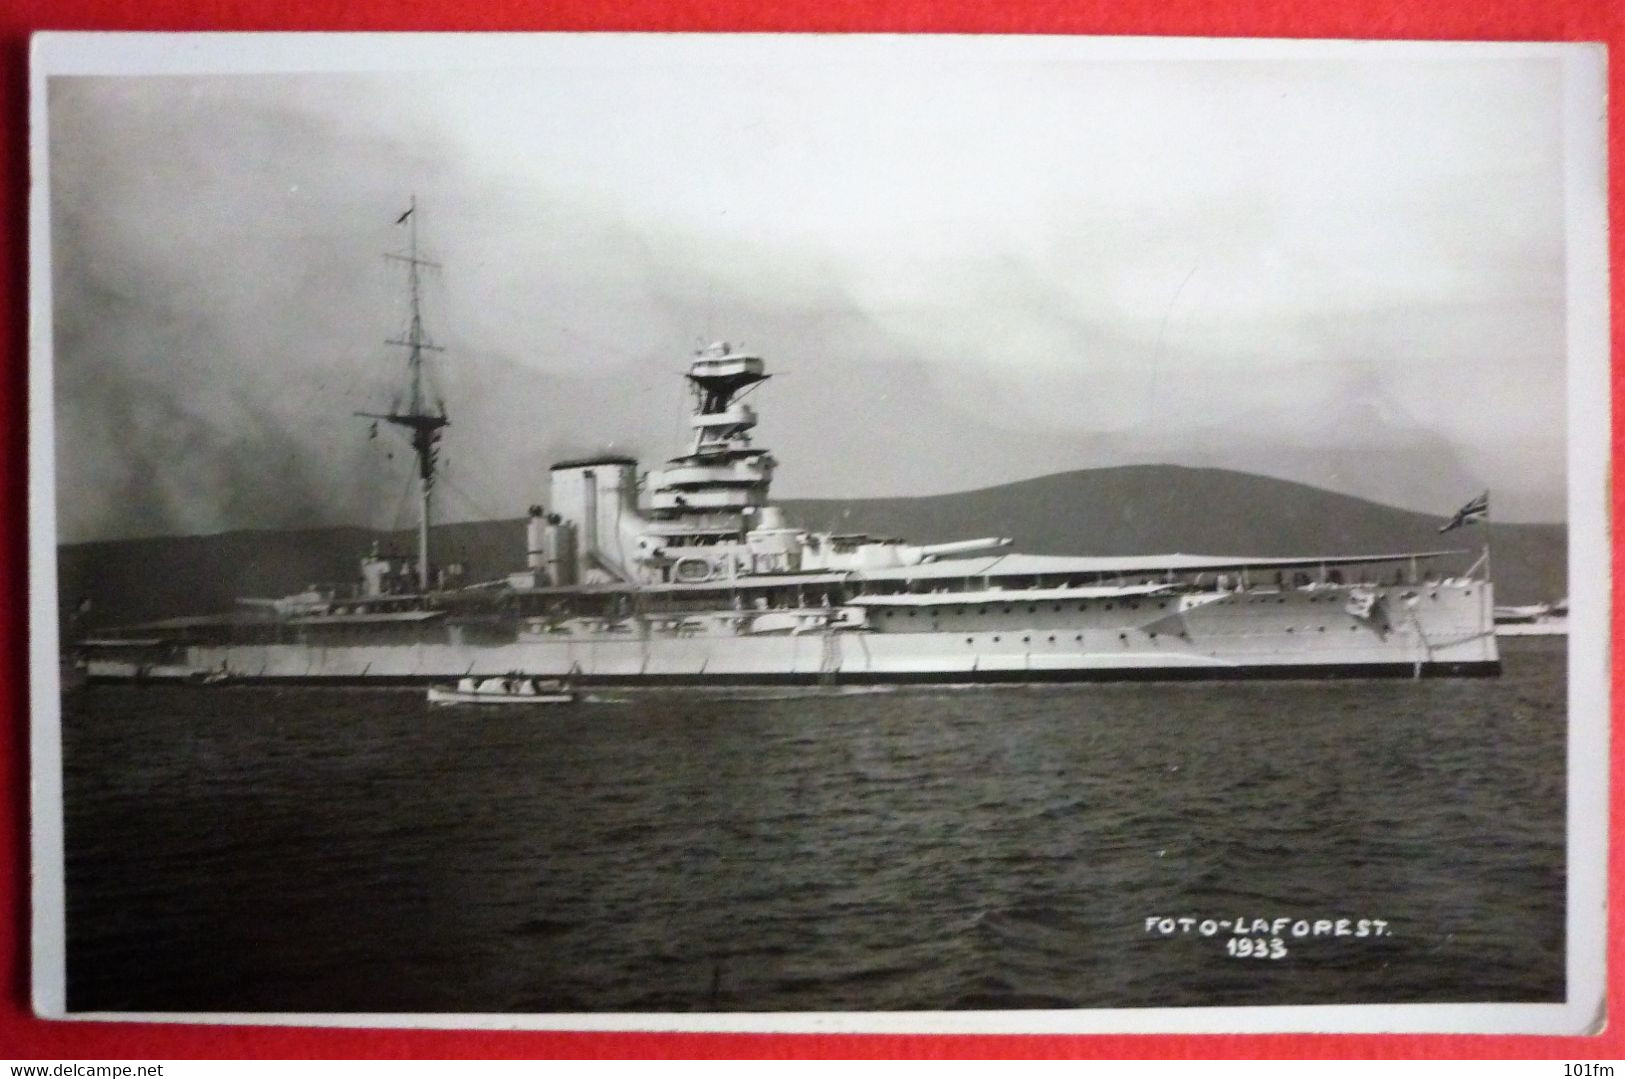 HMS WAR SHIP - RESOLUTION CLASS IN CATTARO, MONTENEGRO 1933 - Oorlog